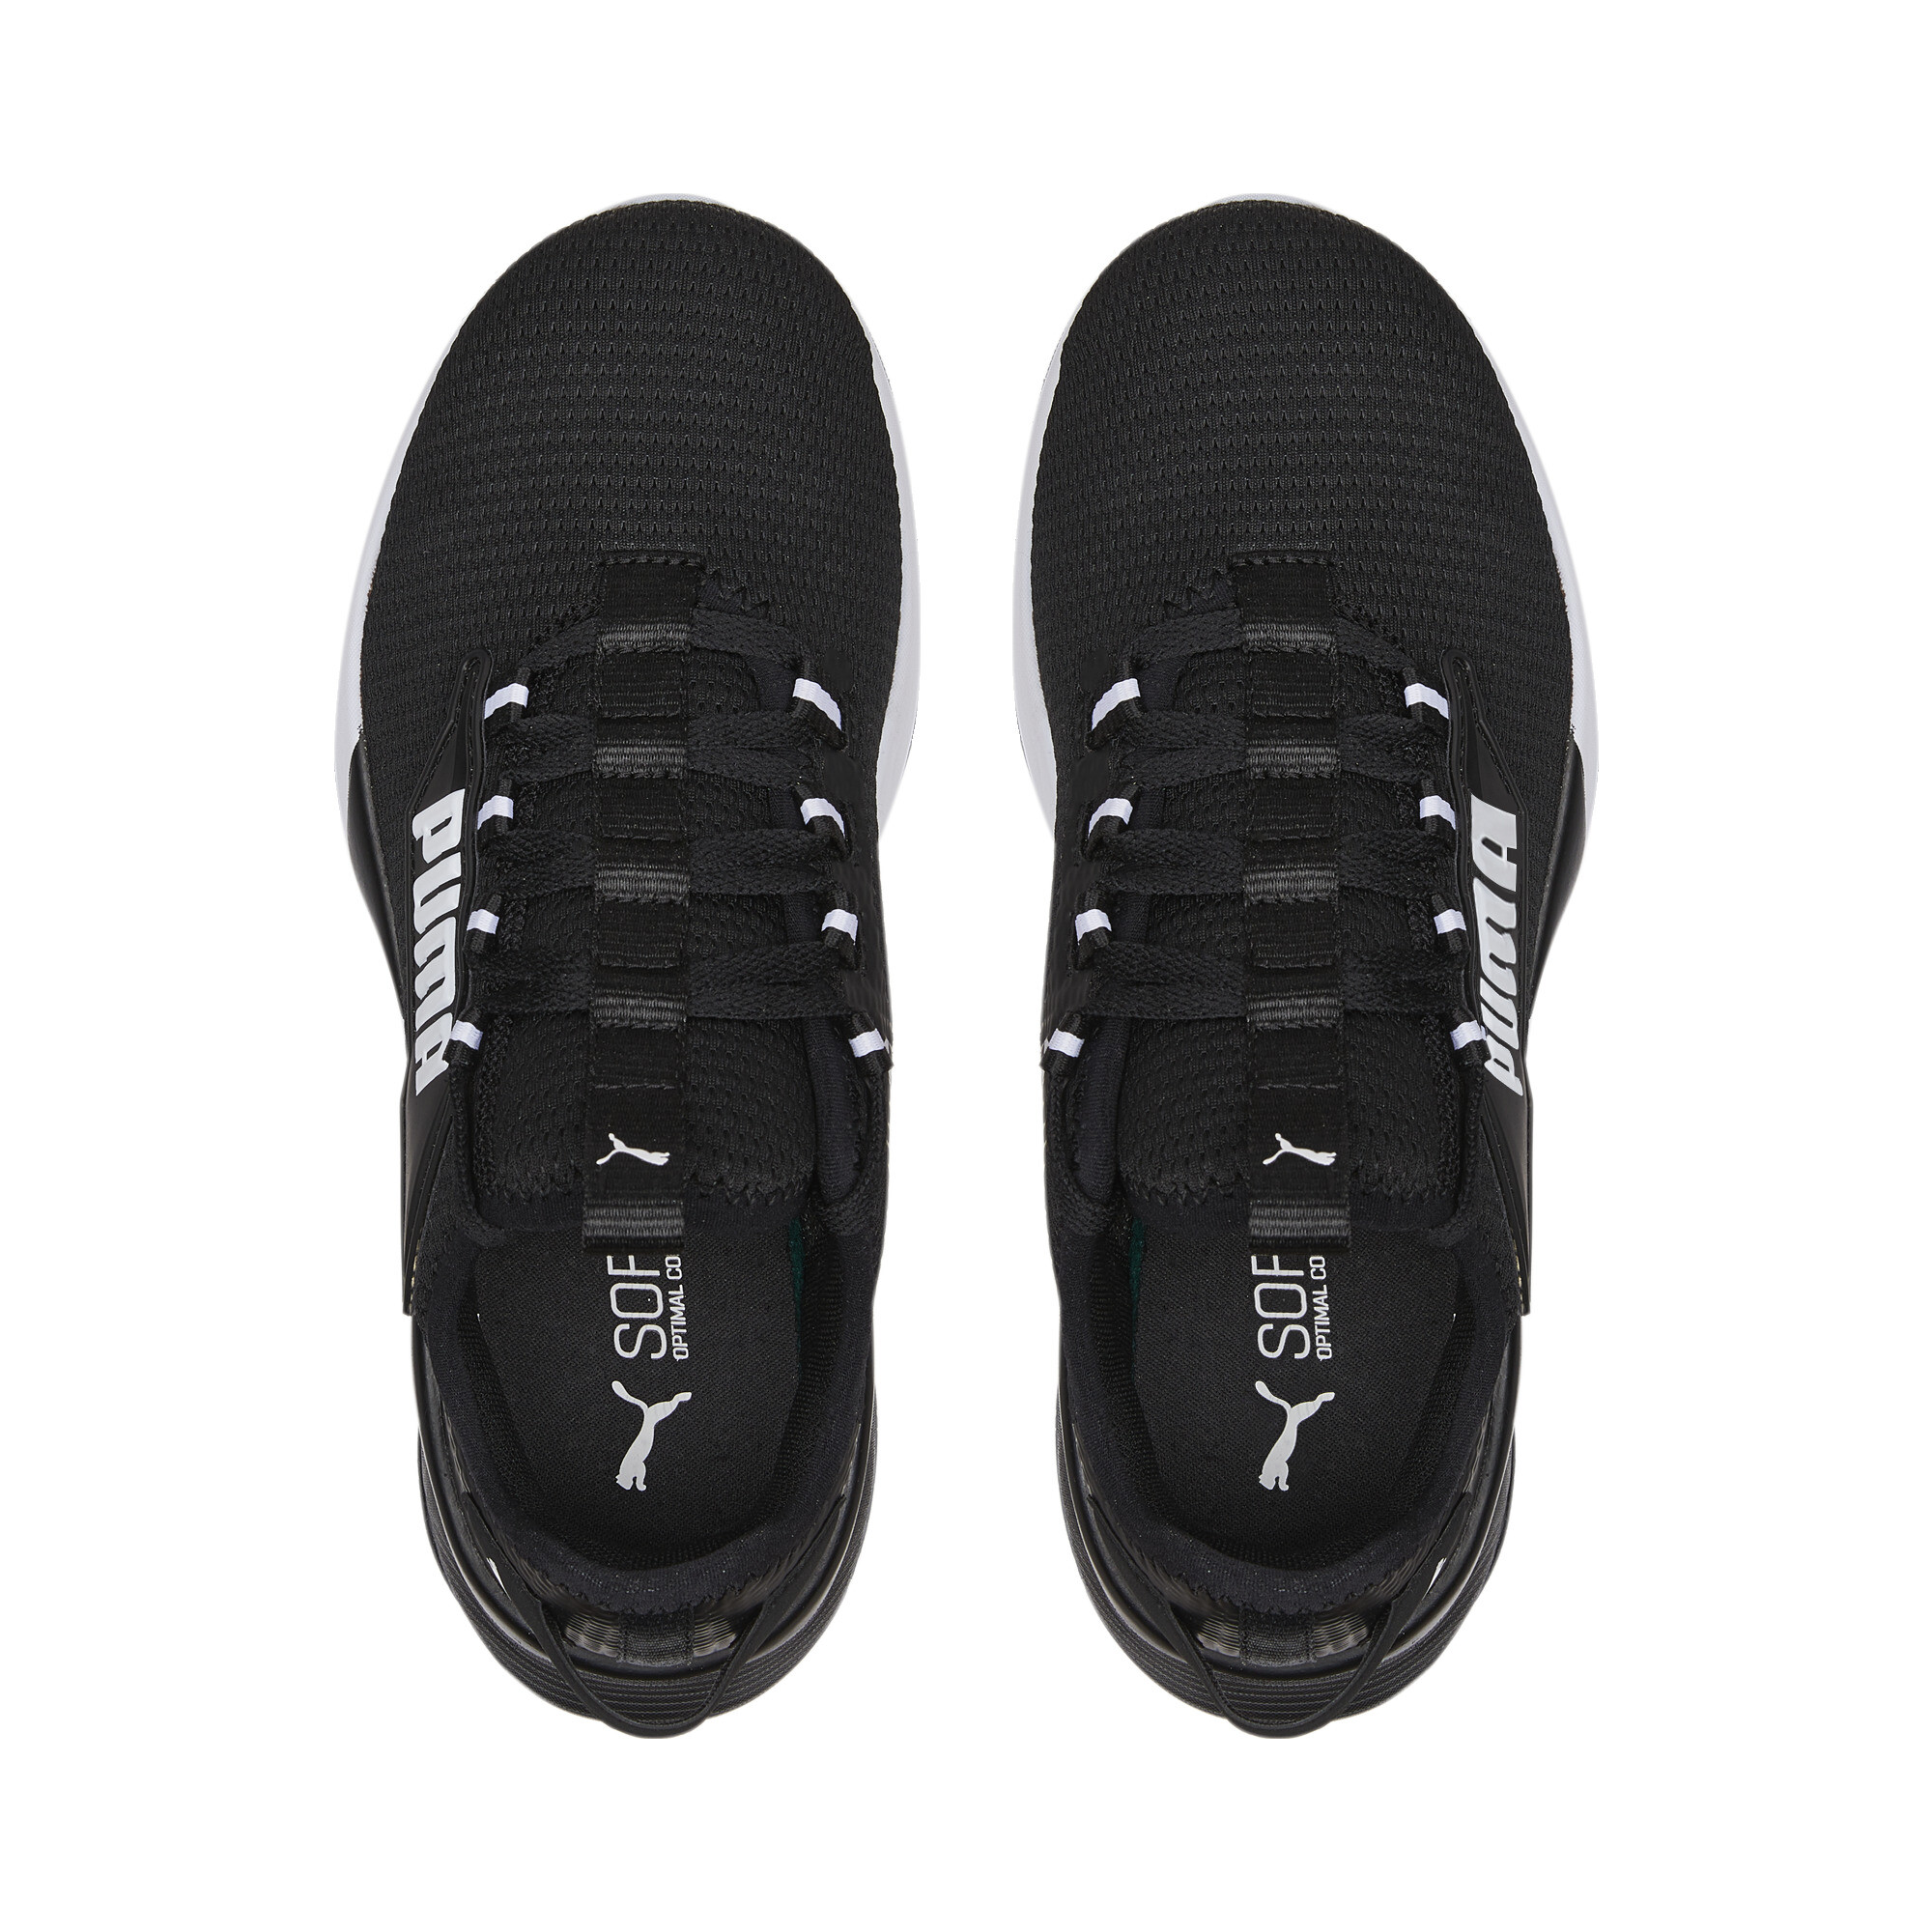 Puma Retaliate 2 Sneakers Youth, Black, Size 37.5, Shoes